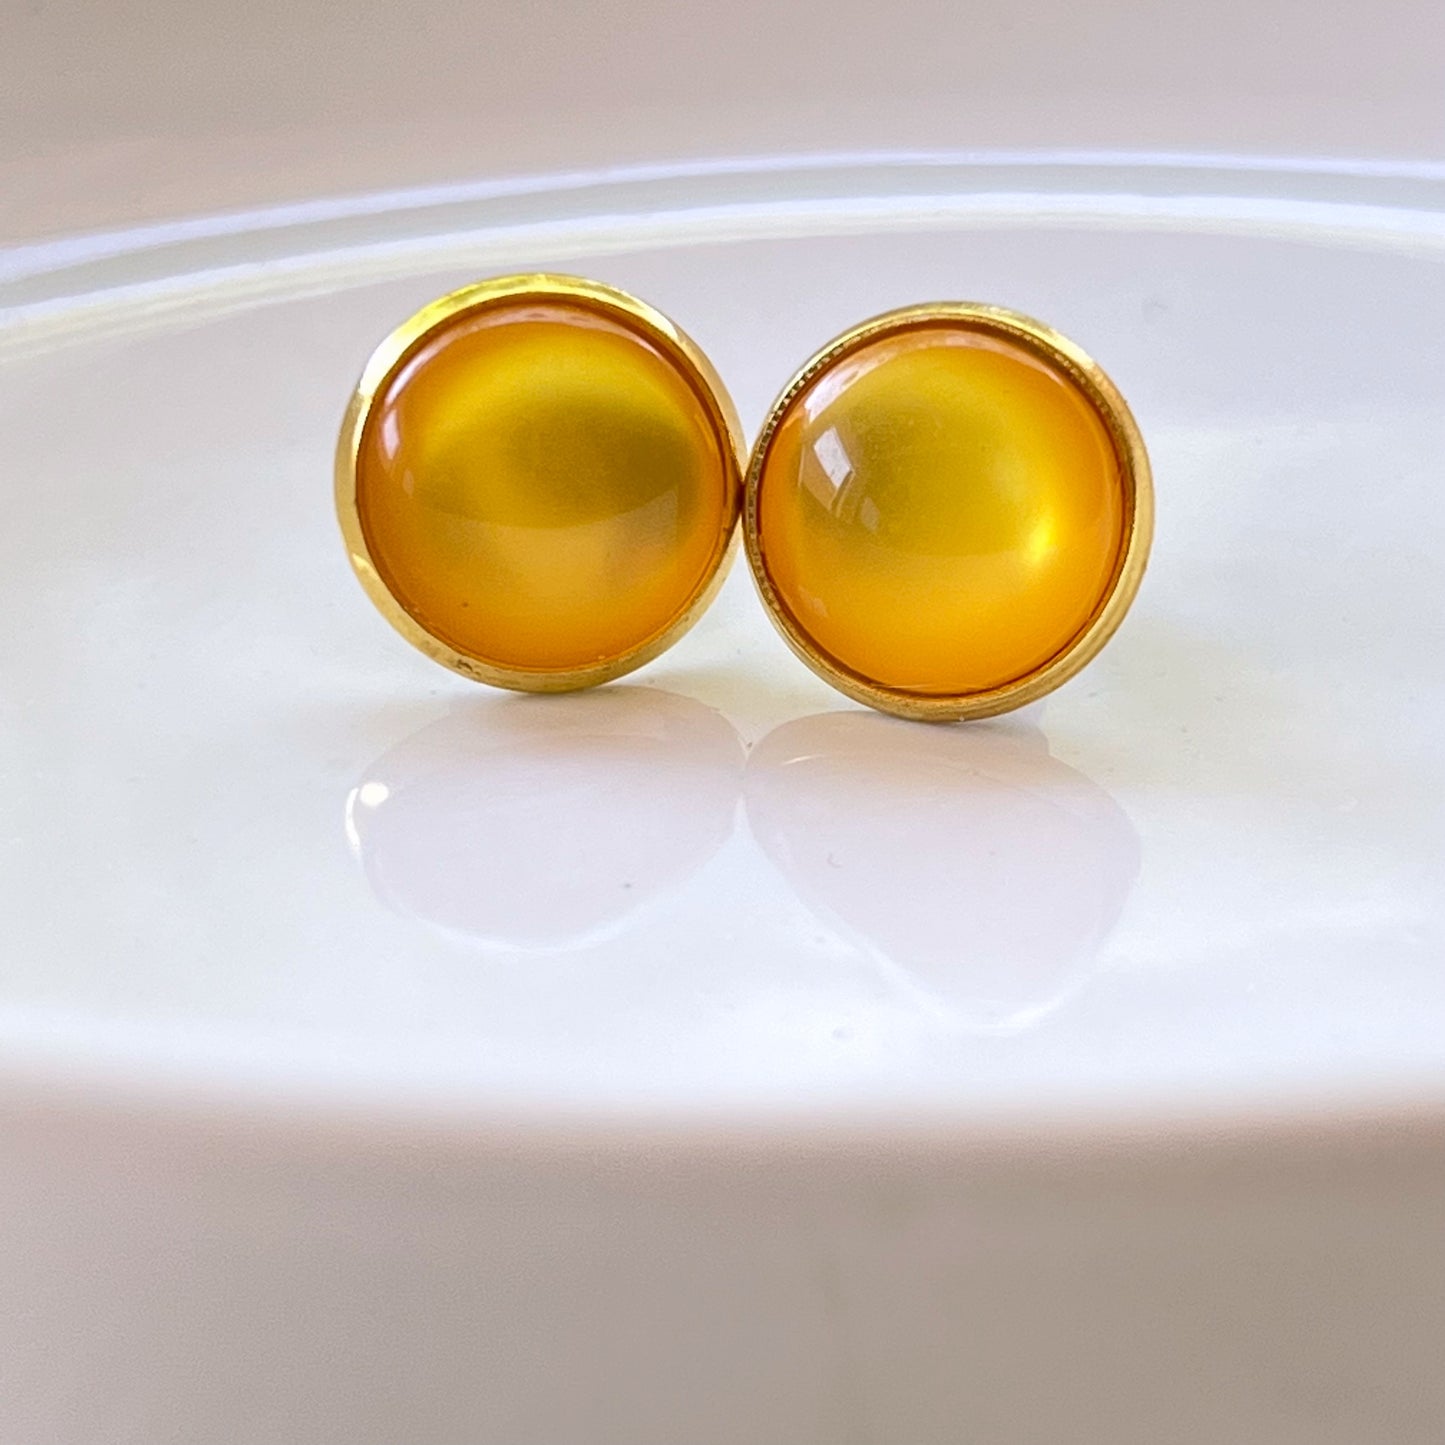 Orange Resin Gold Stud Earrings - Stylish & Vibrant Accessories